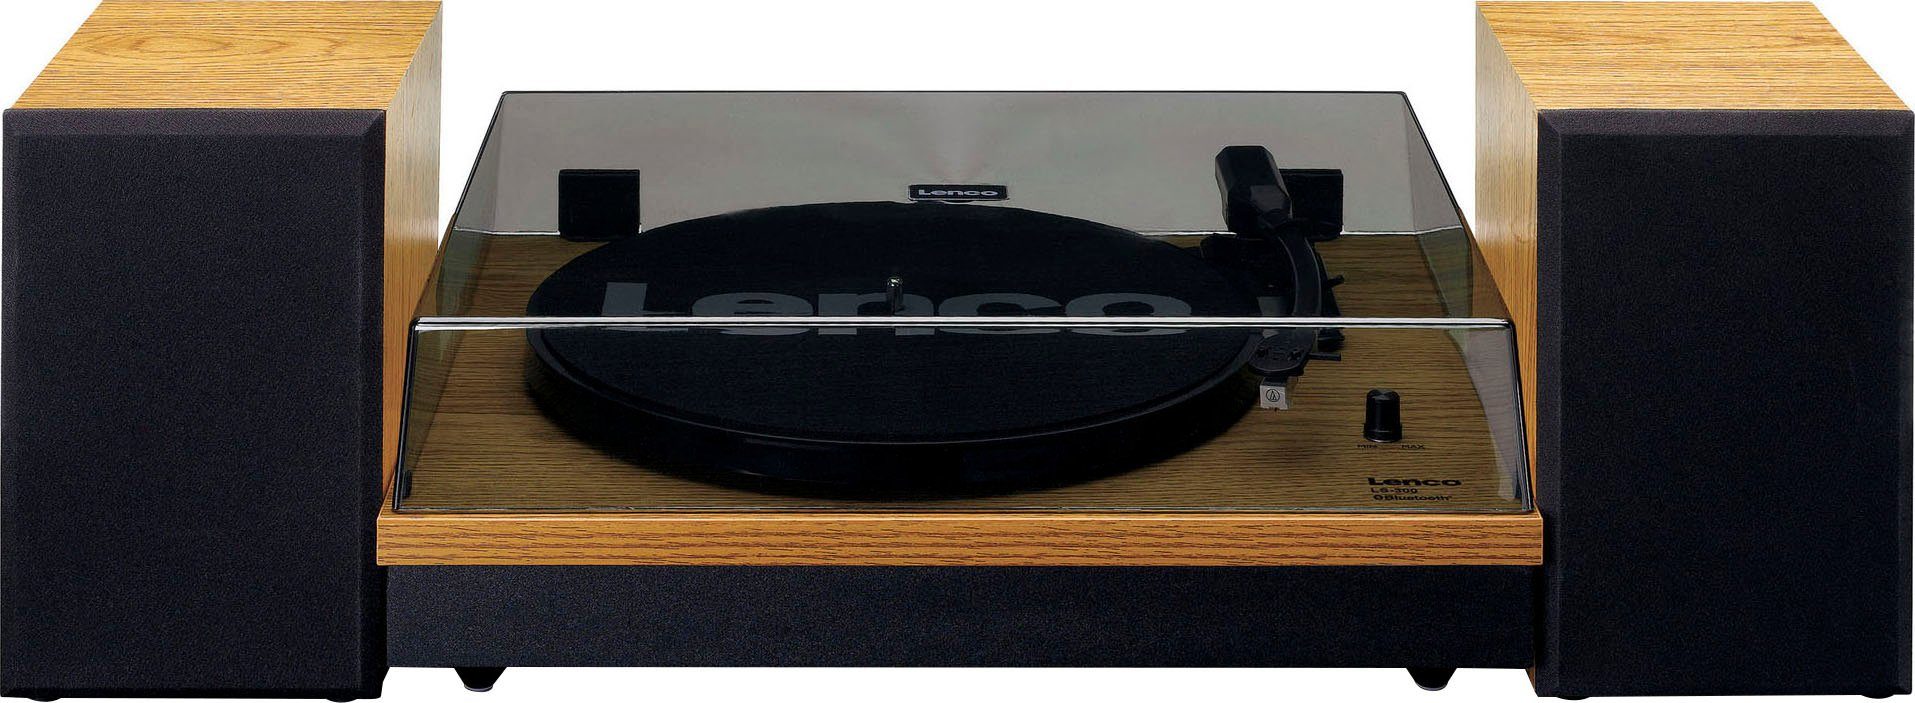 Lenco LS-300WD Plattenspieler mit ext. (Riemenantrieb) Lautsprechern Holz Plattenspieler